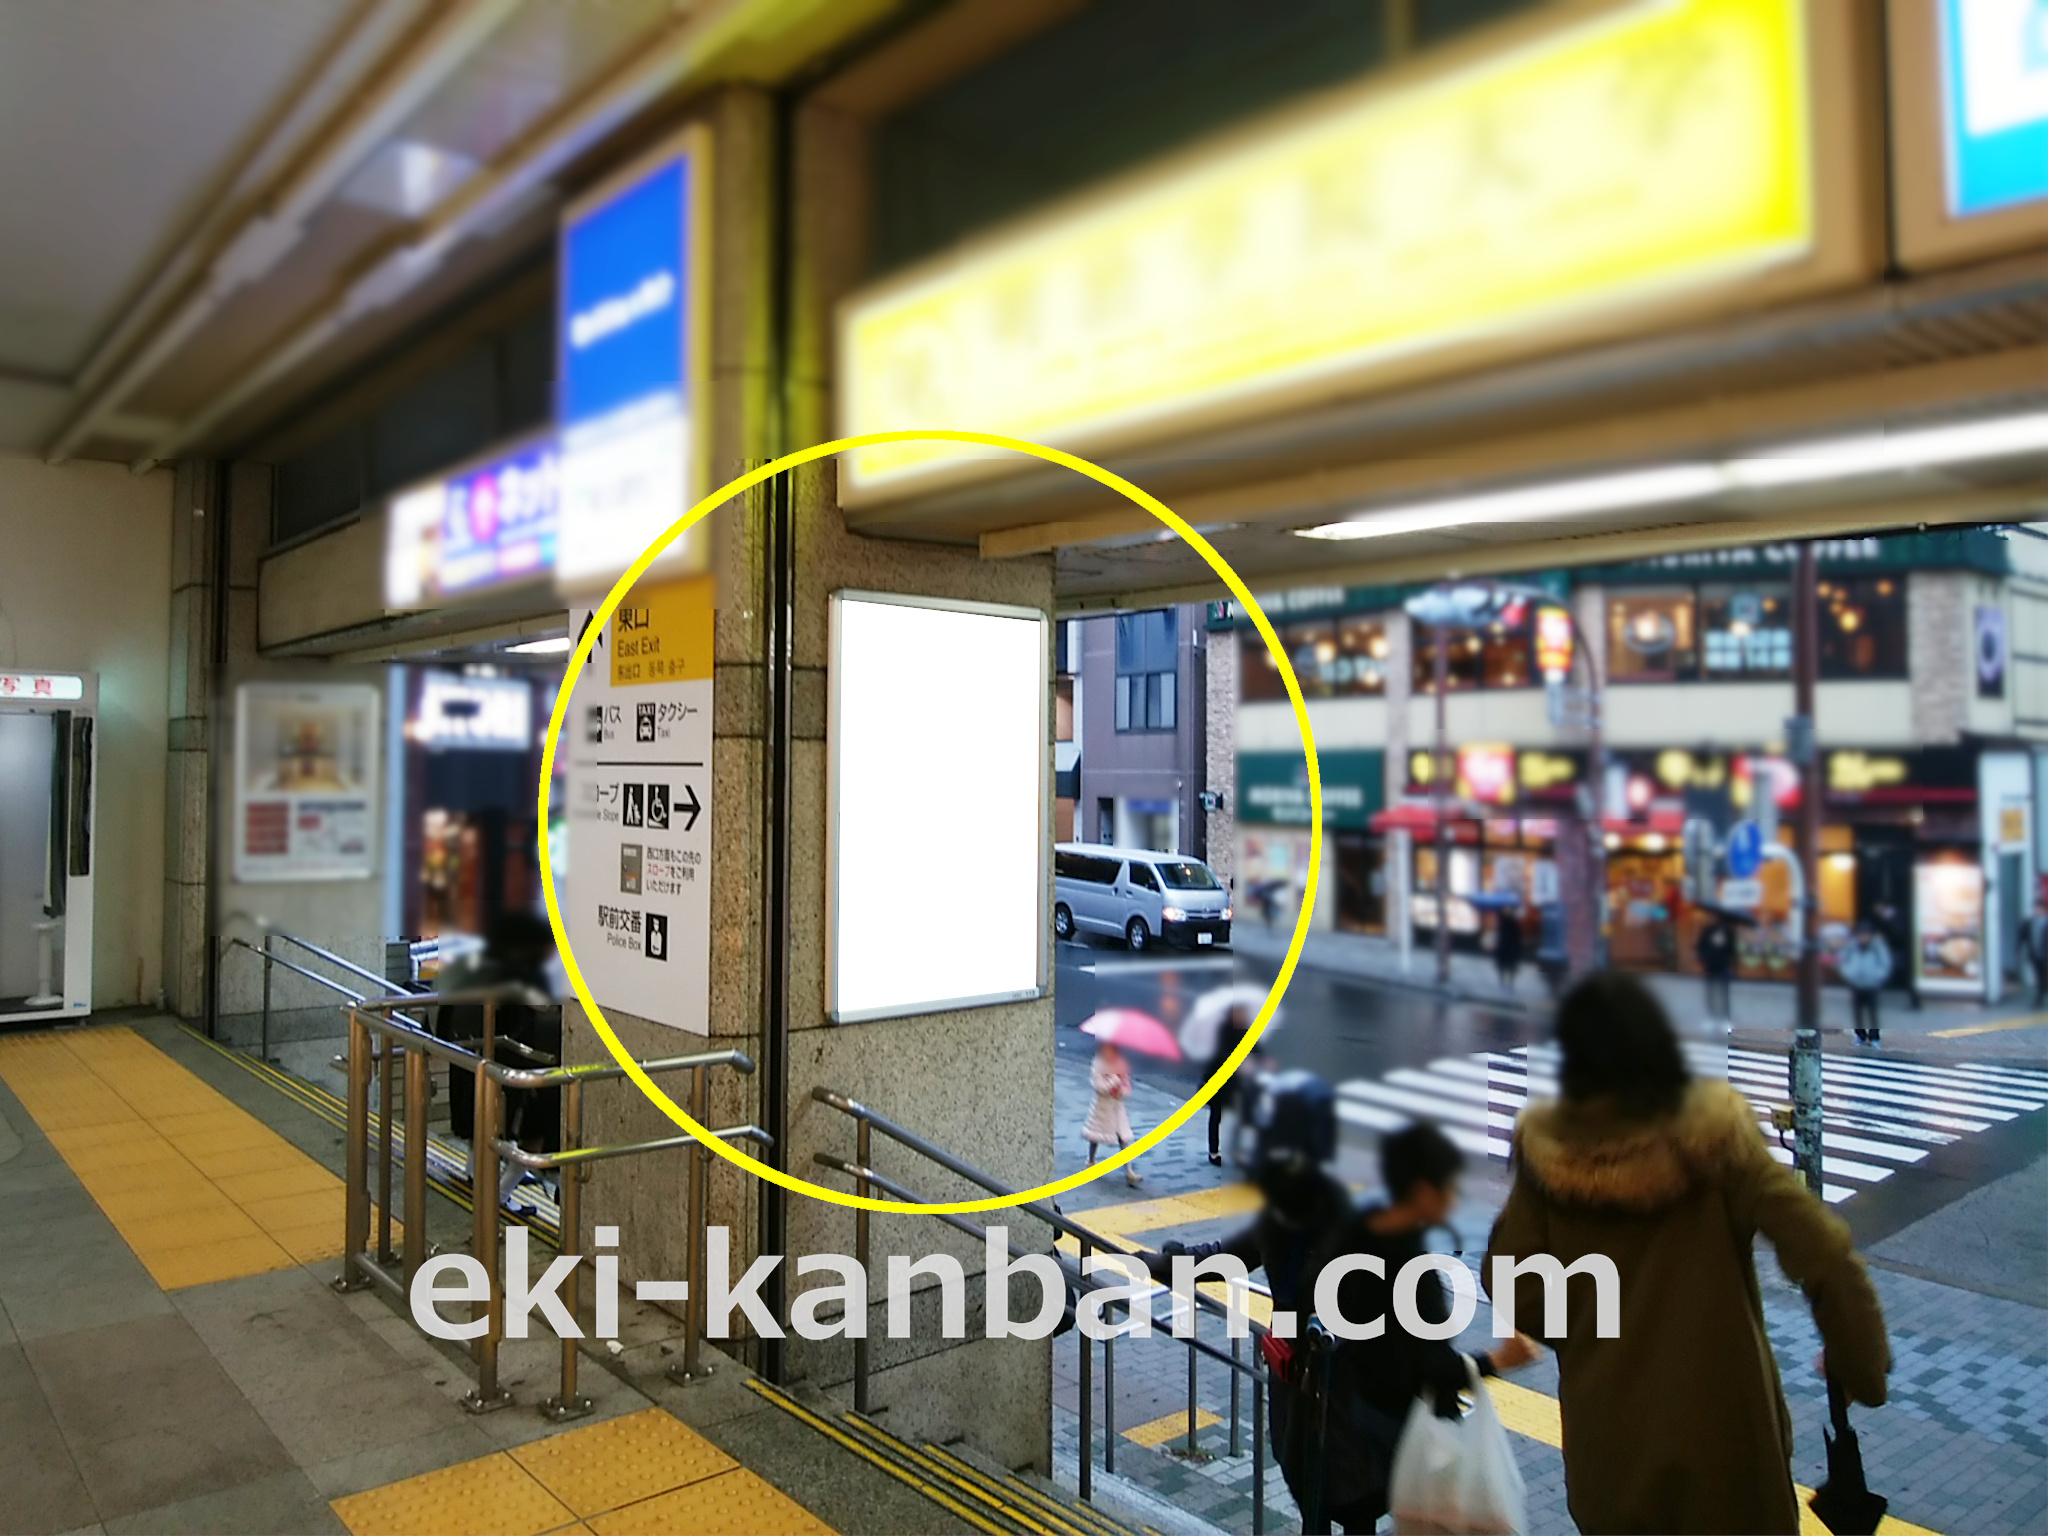 JR 目黒駅の東口出口付近にある広告看板です。